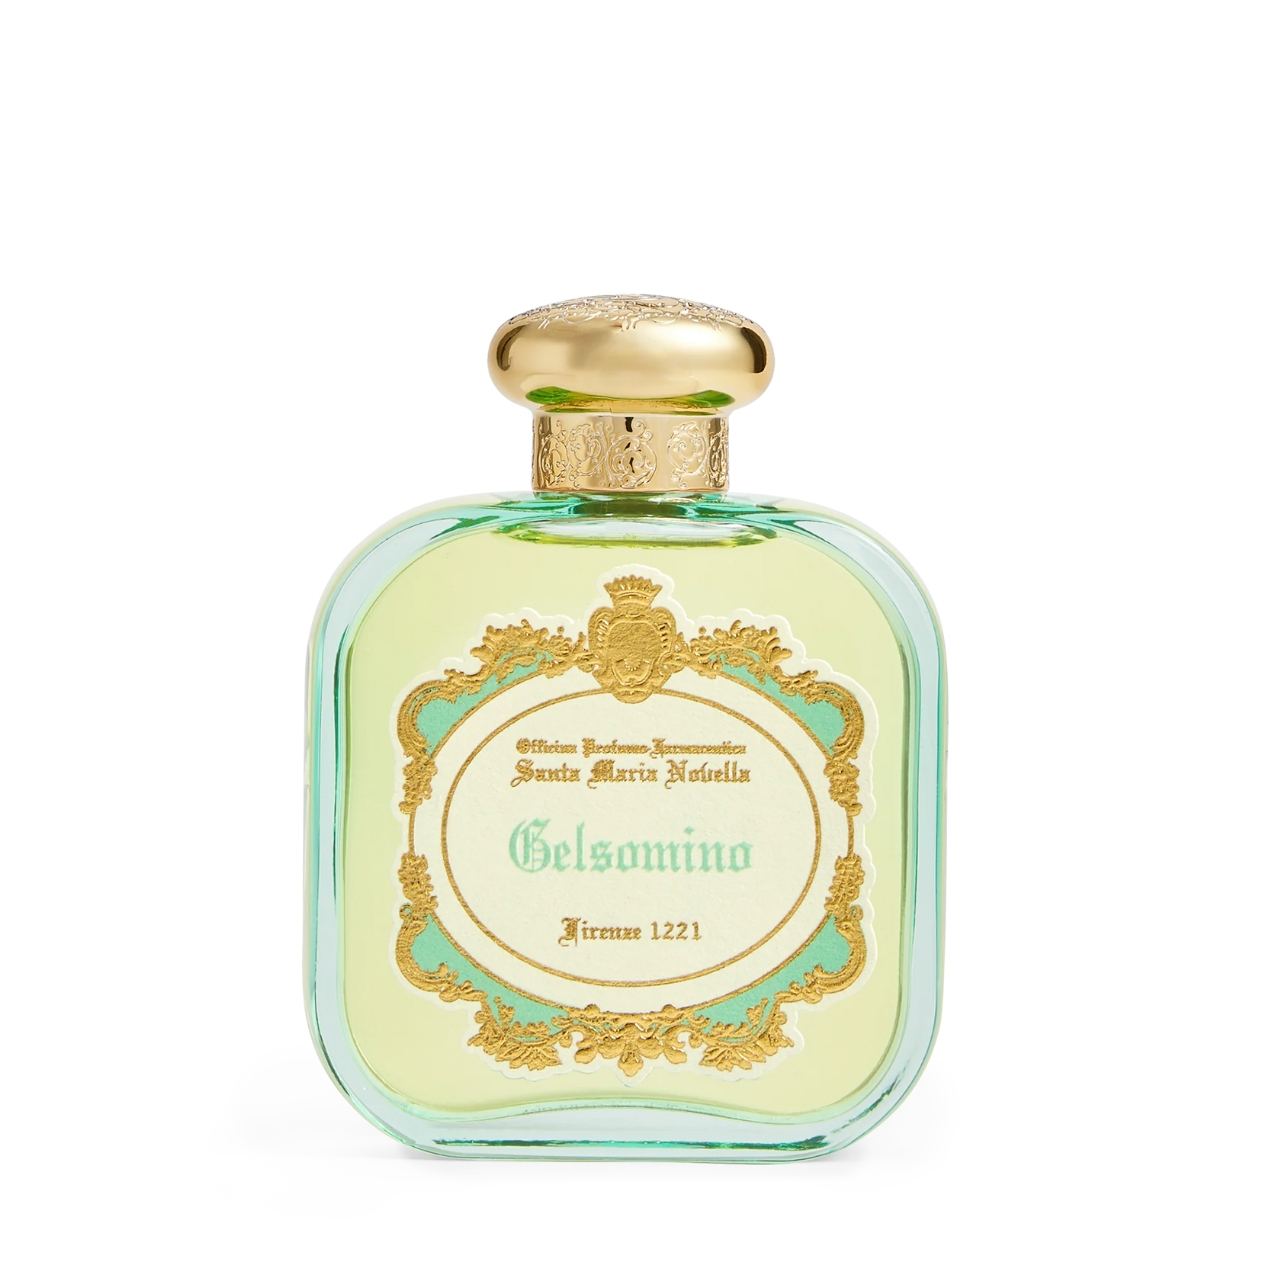 Santa Maria Novella Gelsomino fragrance inspired by jasmine